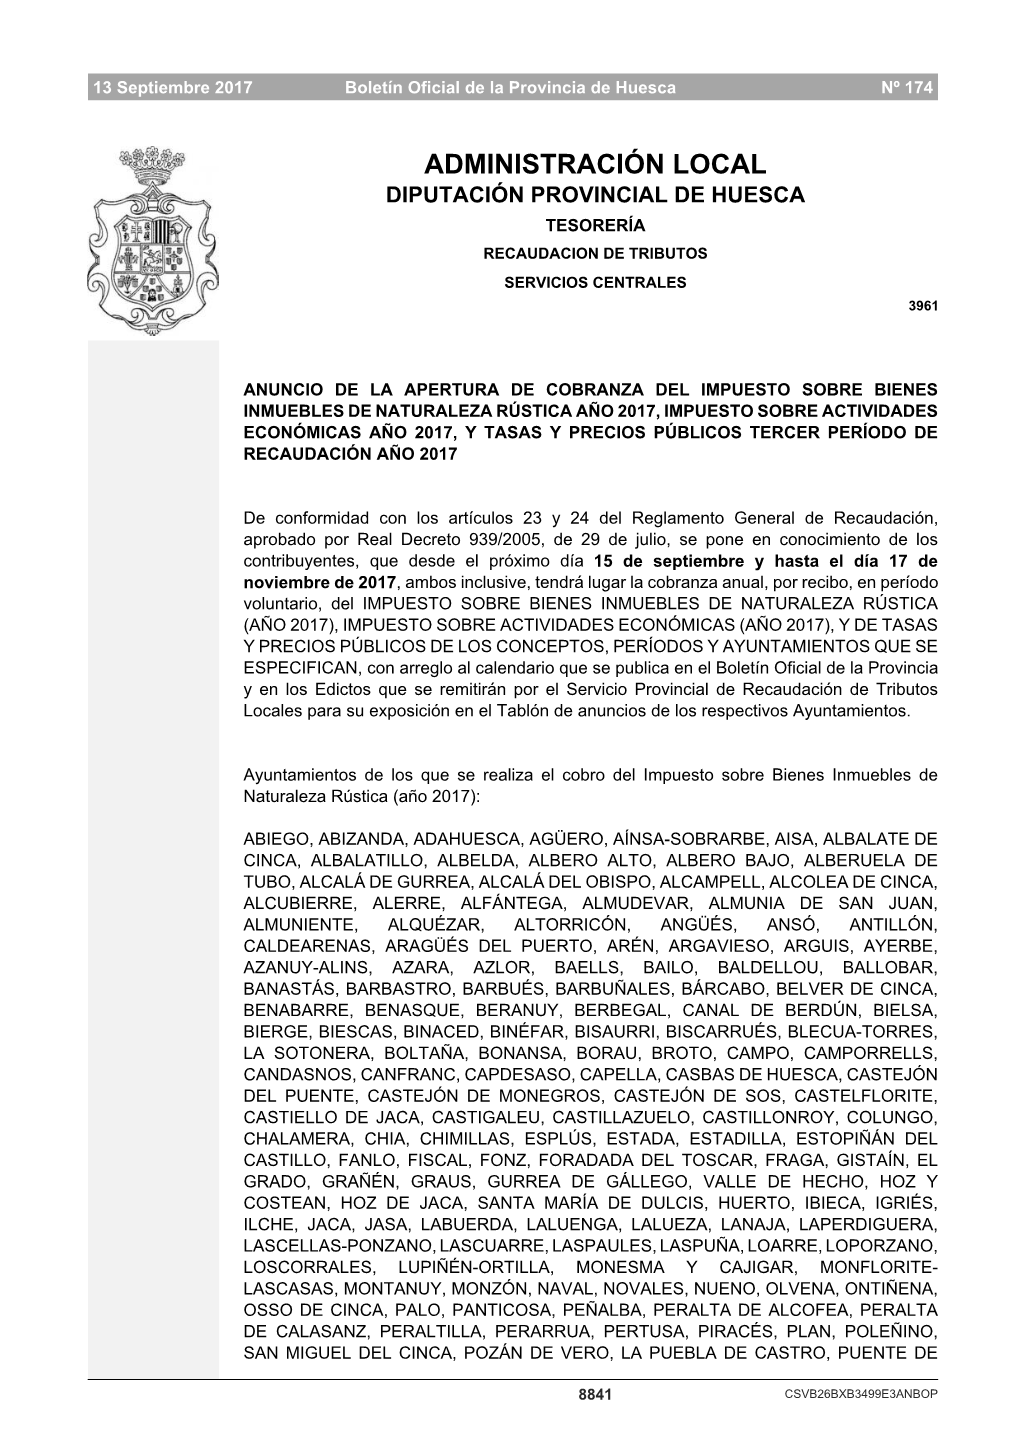 Administración Local Diputación Provincial De Huesca Tesorería Recaudacion De Tributos Servicios Centrales 3961